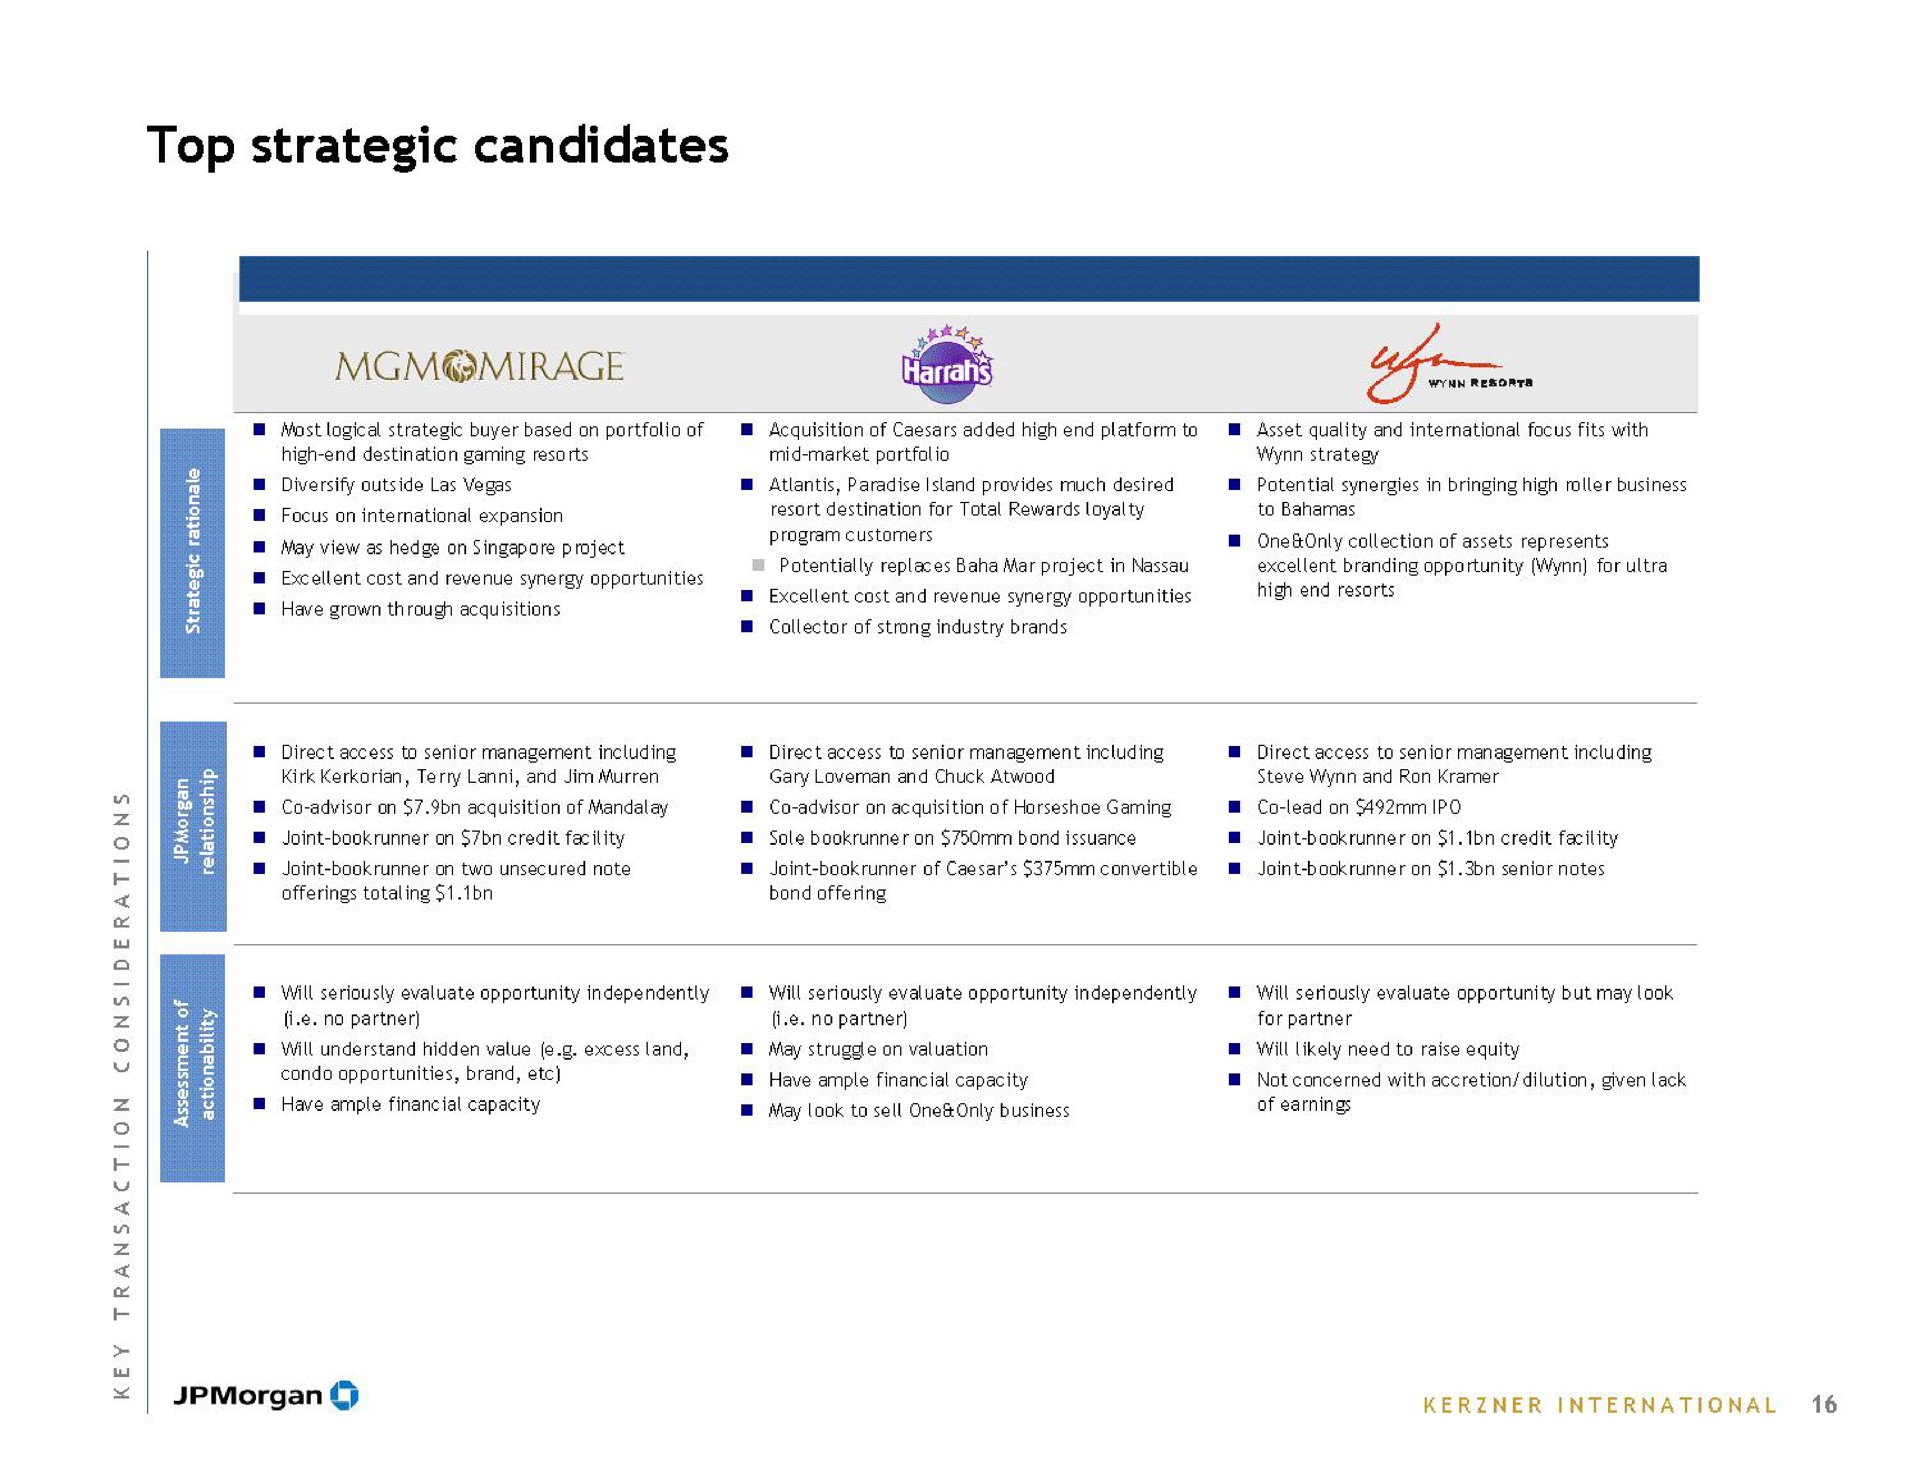 top strategic candidates mirage | J.P.Morgan